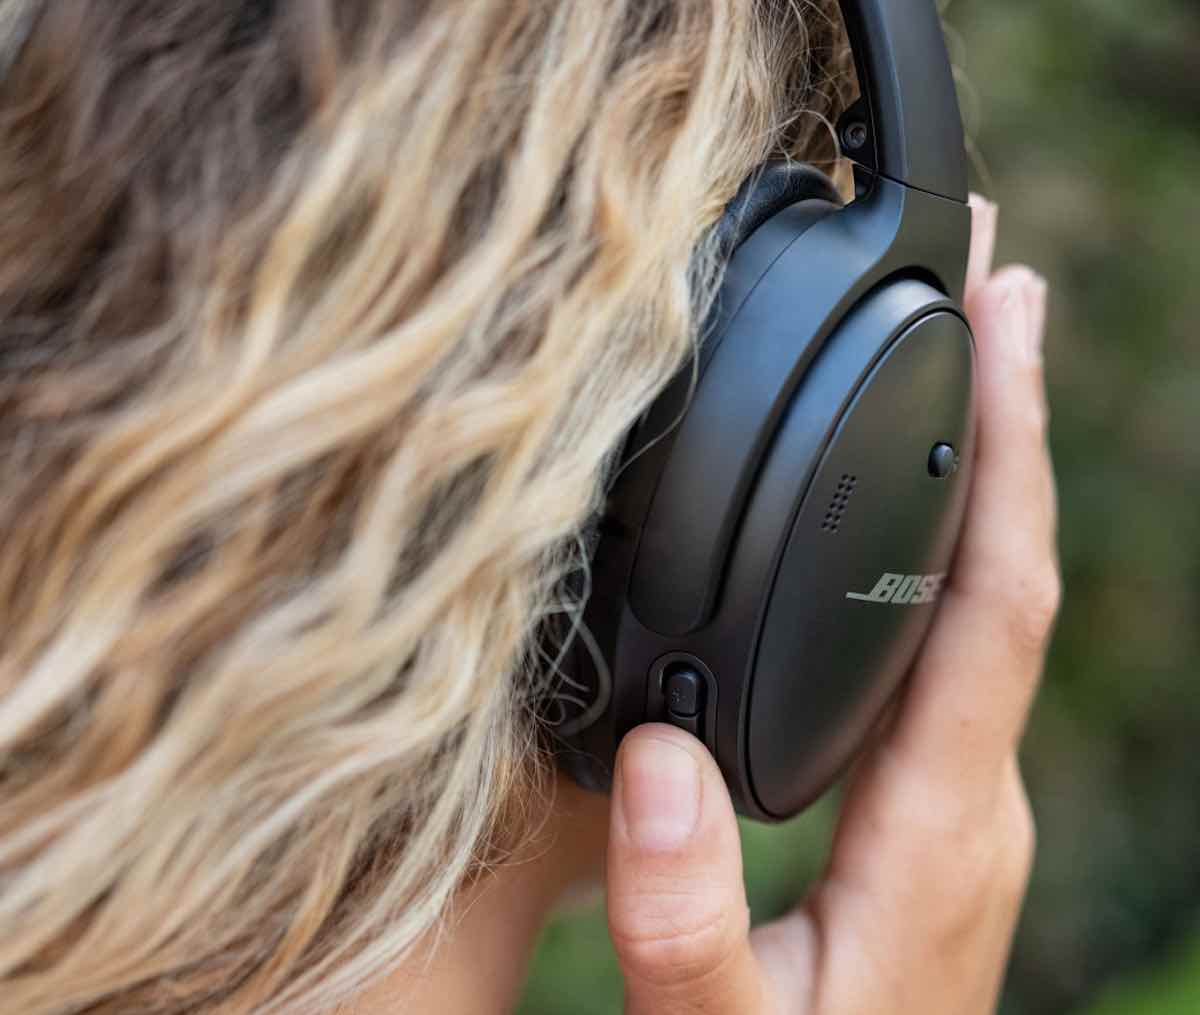 Best wireless headphones as rated by Best Buy customers